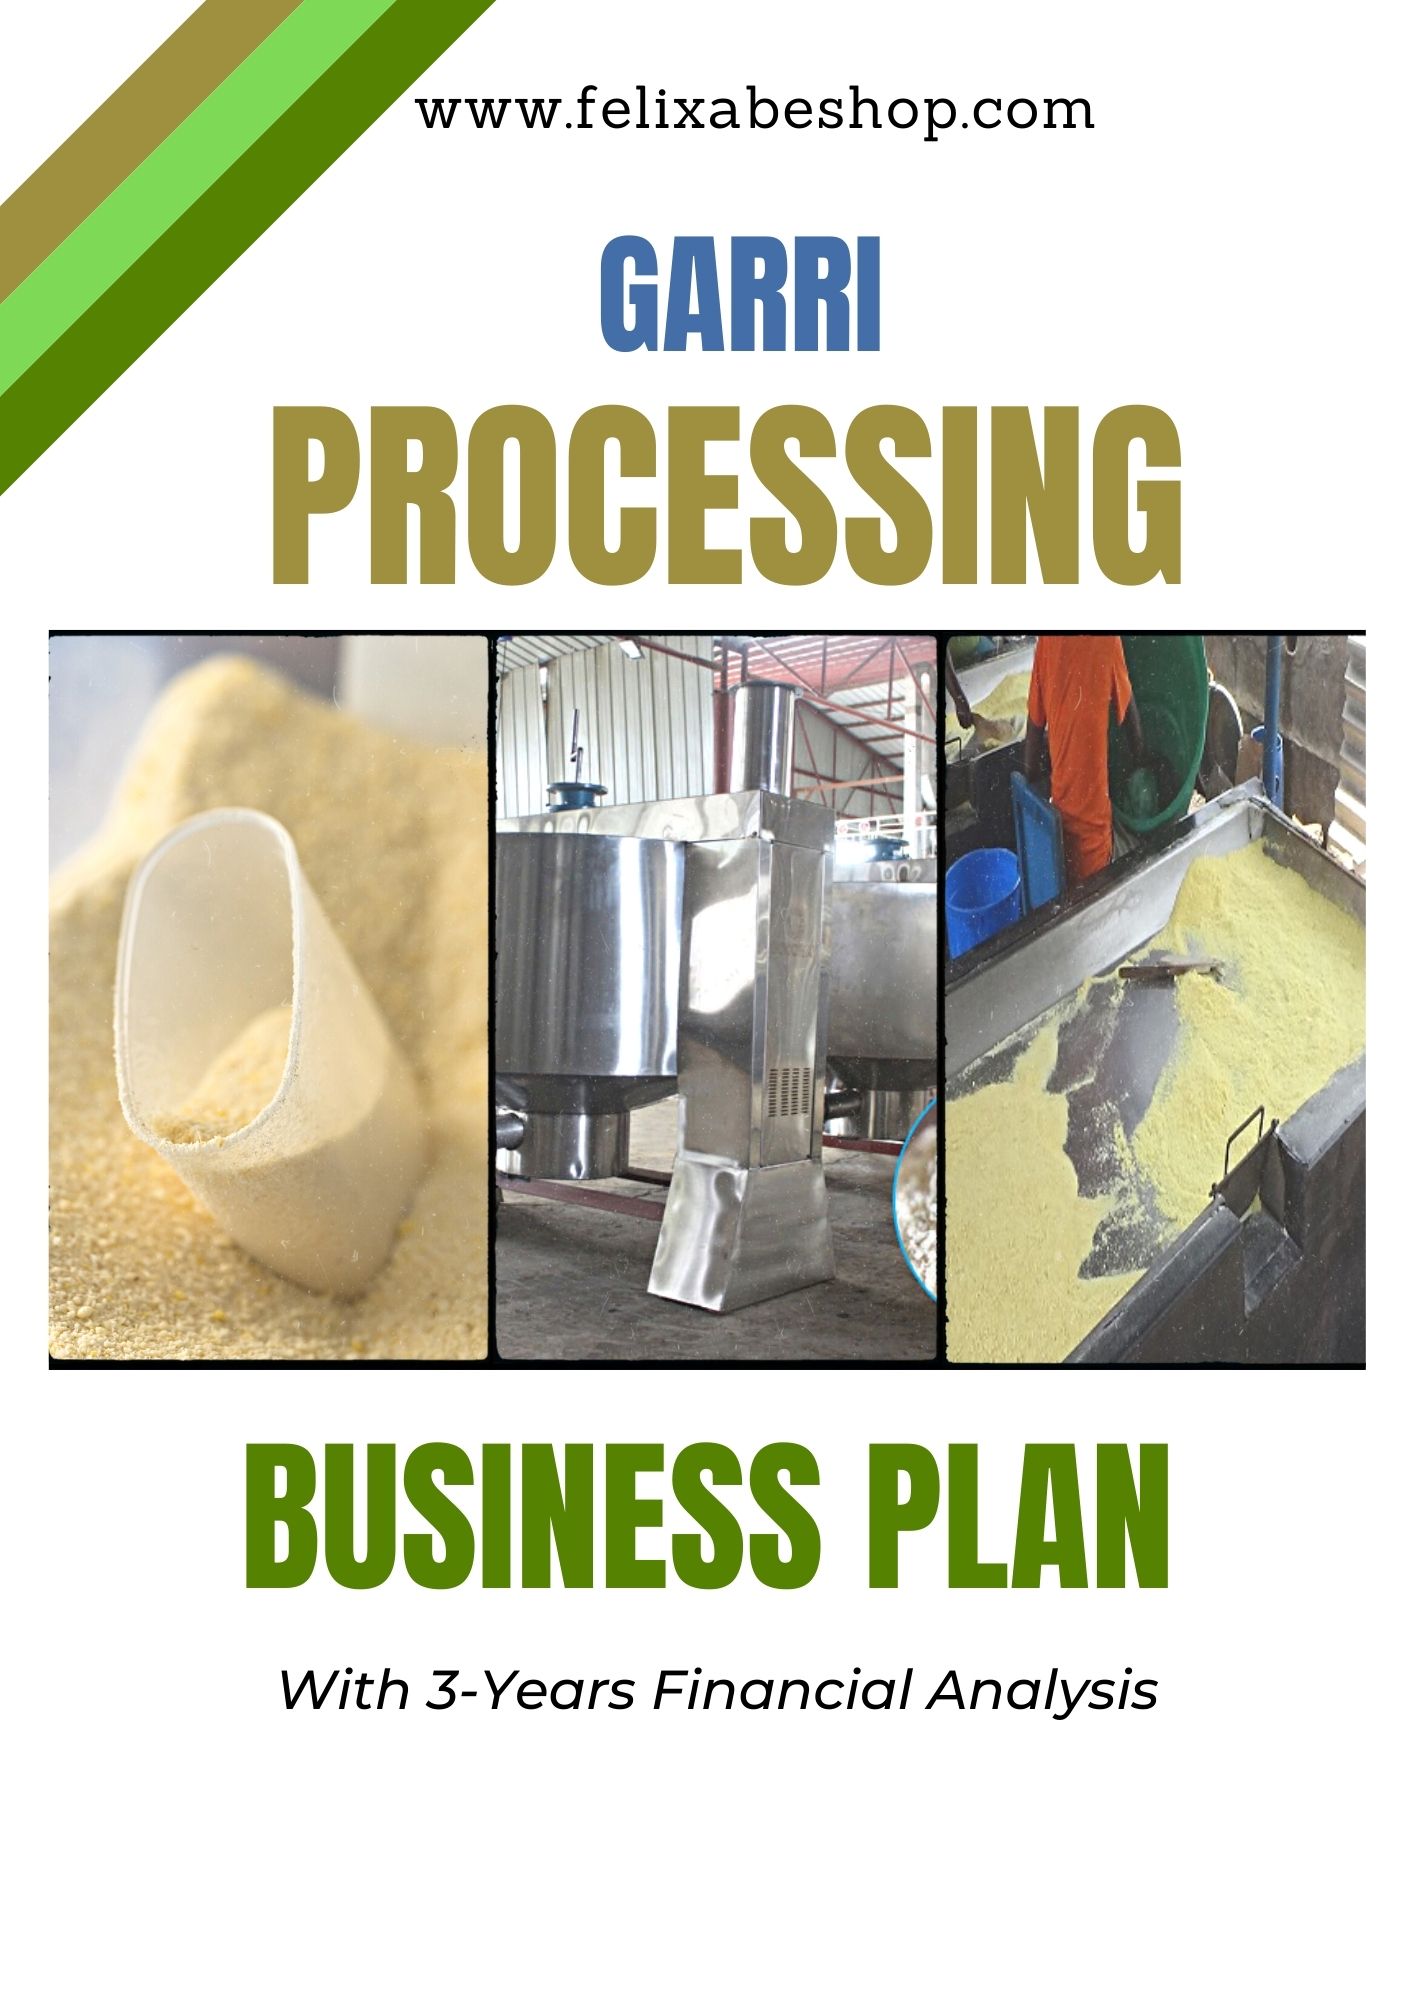 a business plan on garri processing